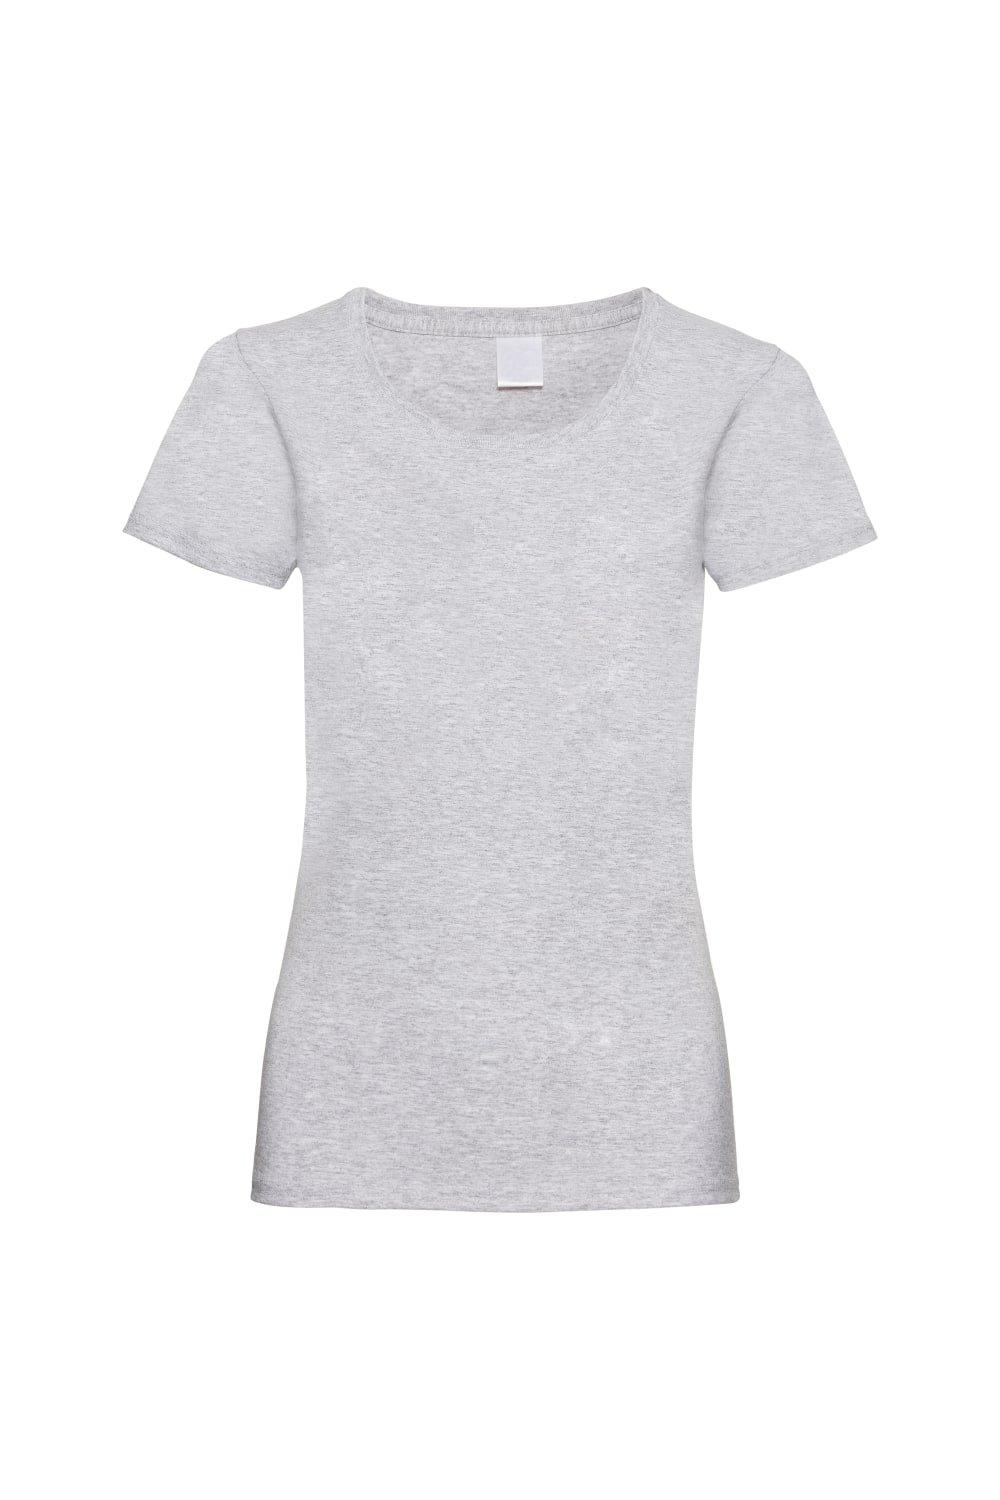 Повседневная футболка с короткими рукавами Value Universal Textiles, серый повседневная футболка value с длинным рукавом universal textiles белый